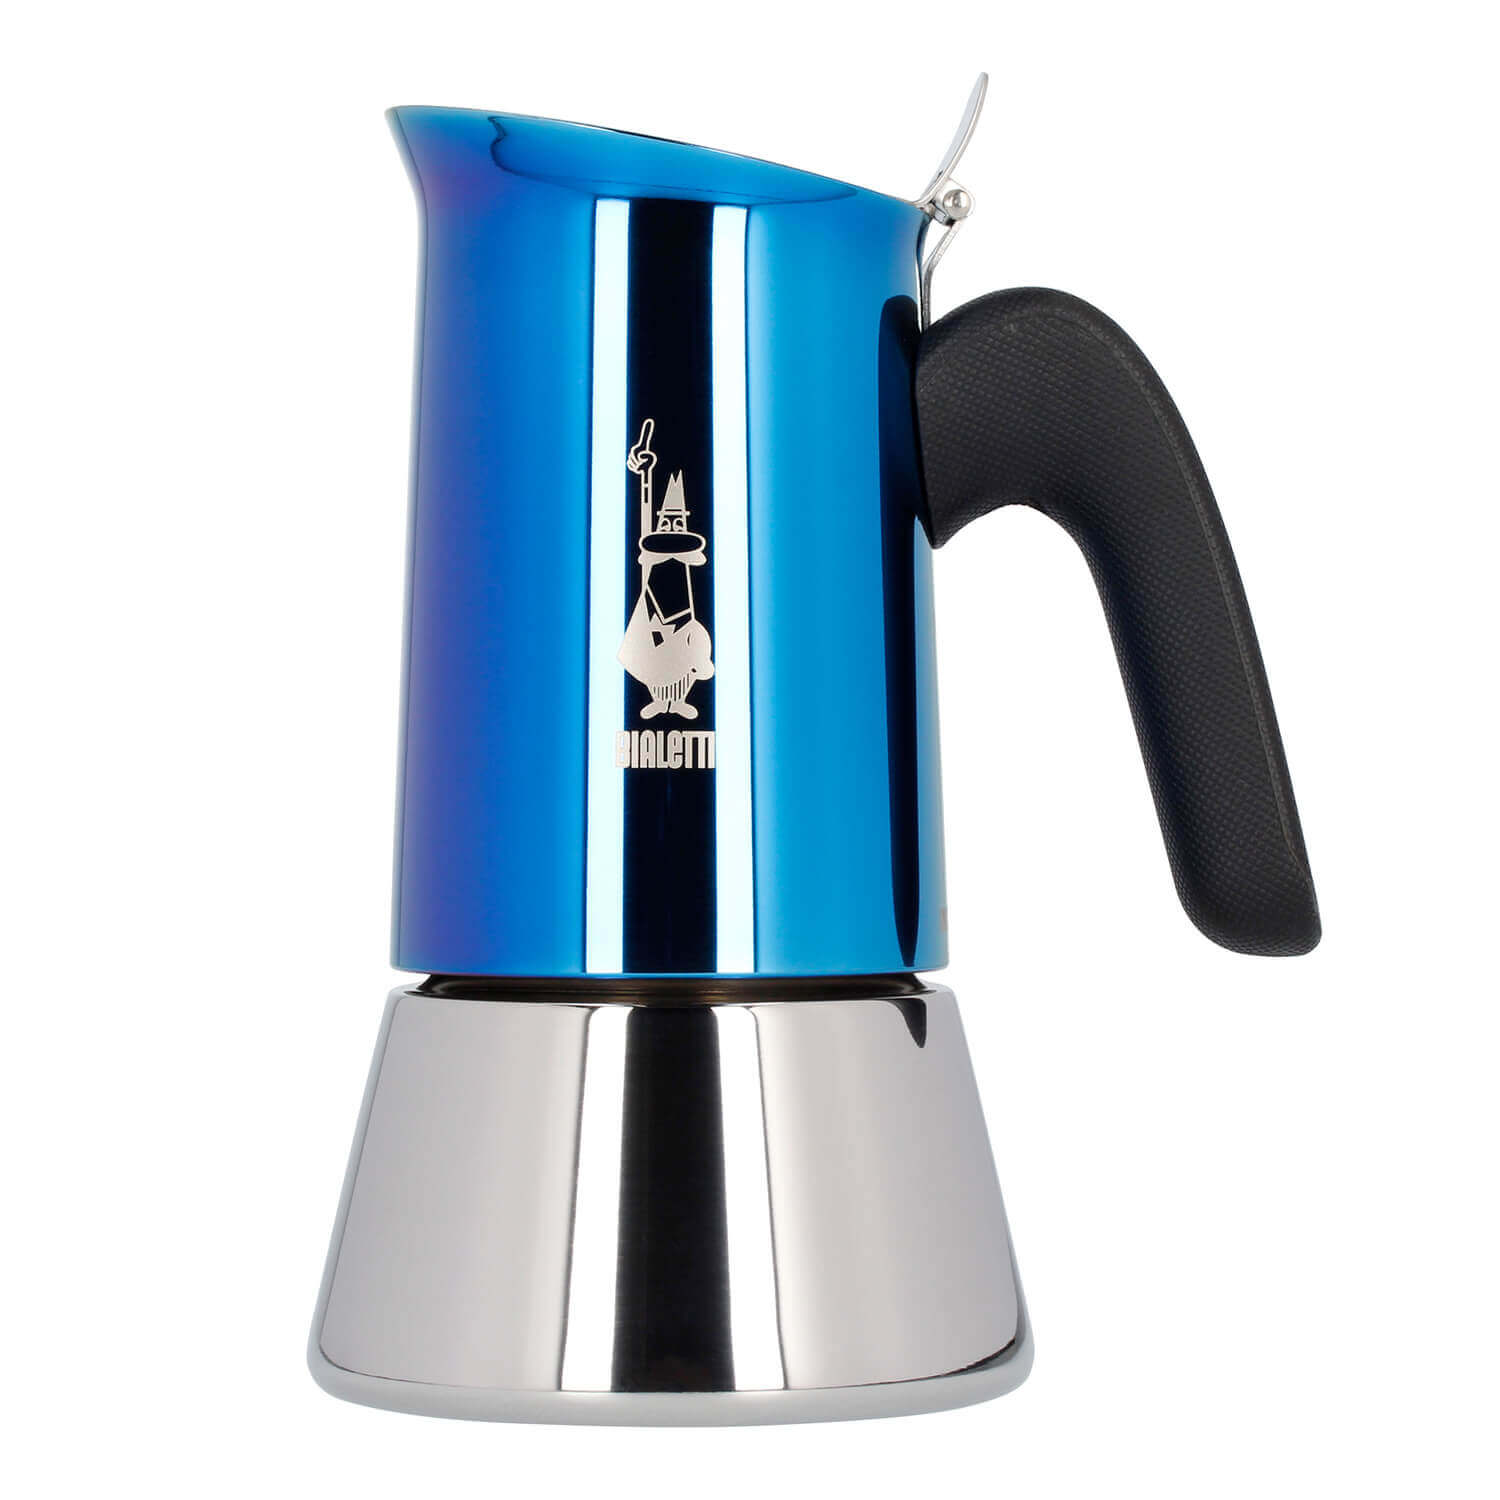 Bialetti New Venus 4 cups - stainless steel mocha teapot - blue